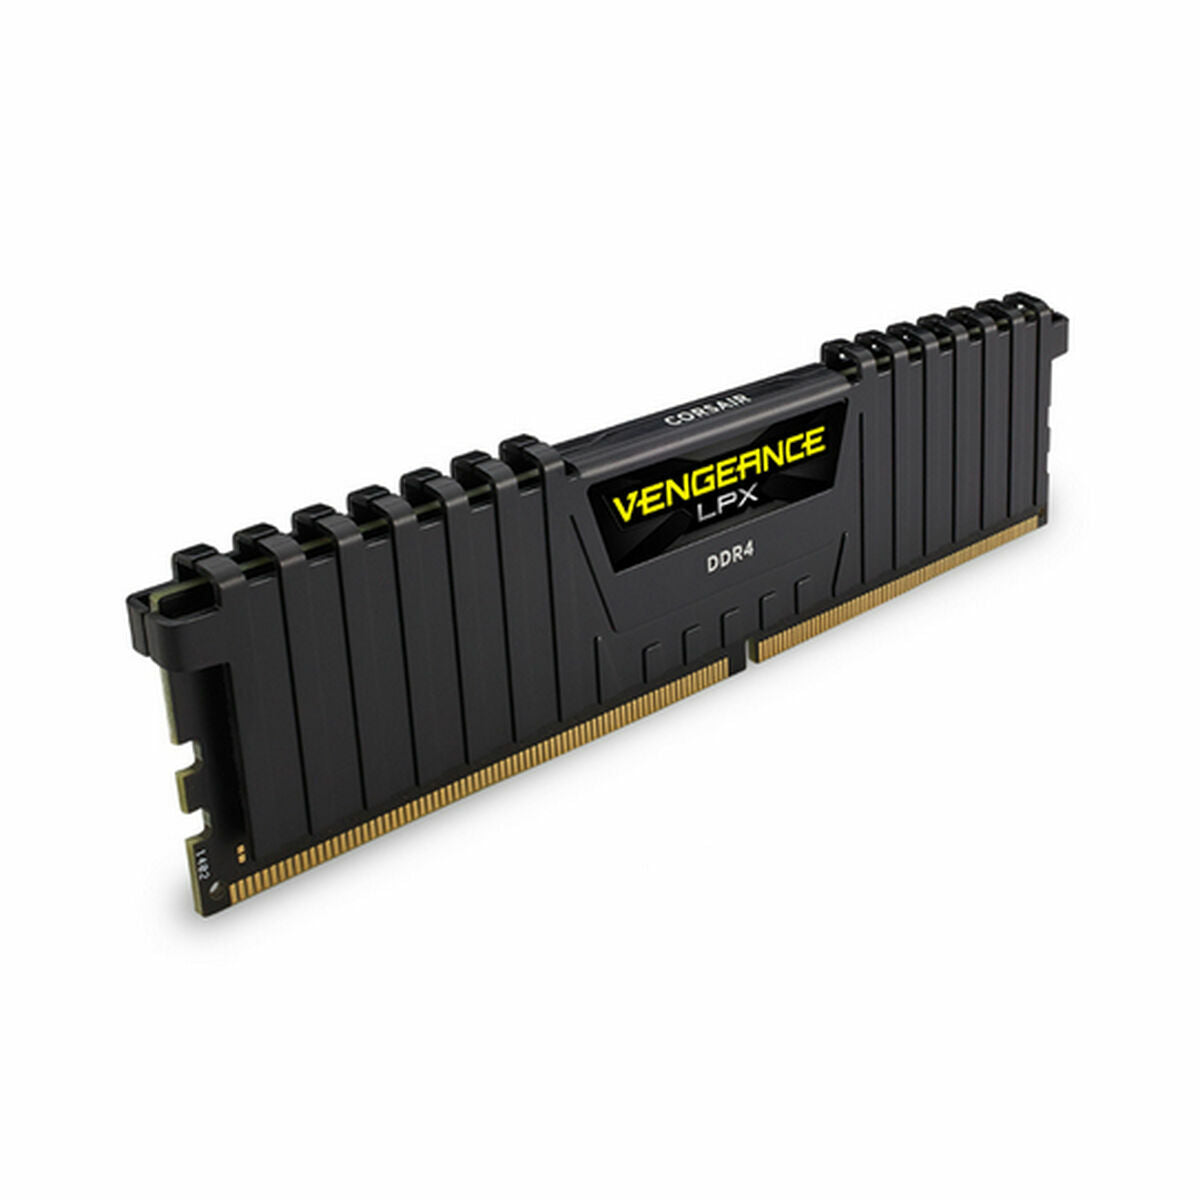 RAM Memory Corsair CMK16GX4M2B3000C15 CL15-3